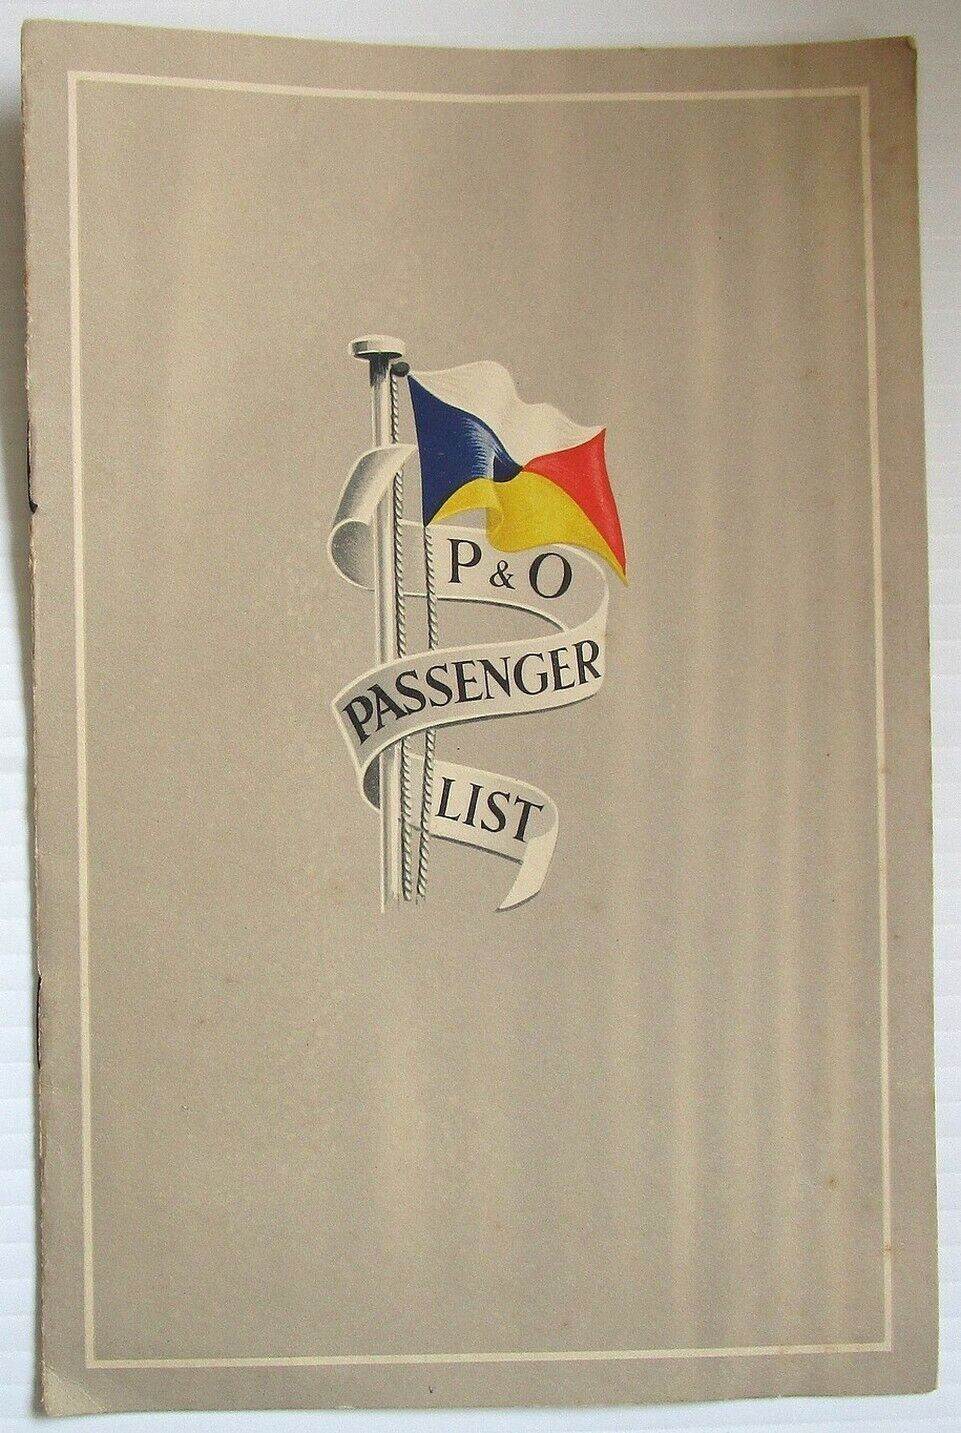 P&o Rms Chusan 1955 Passengger List